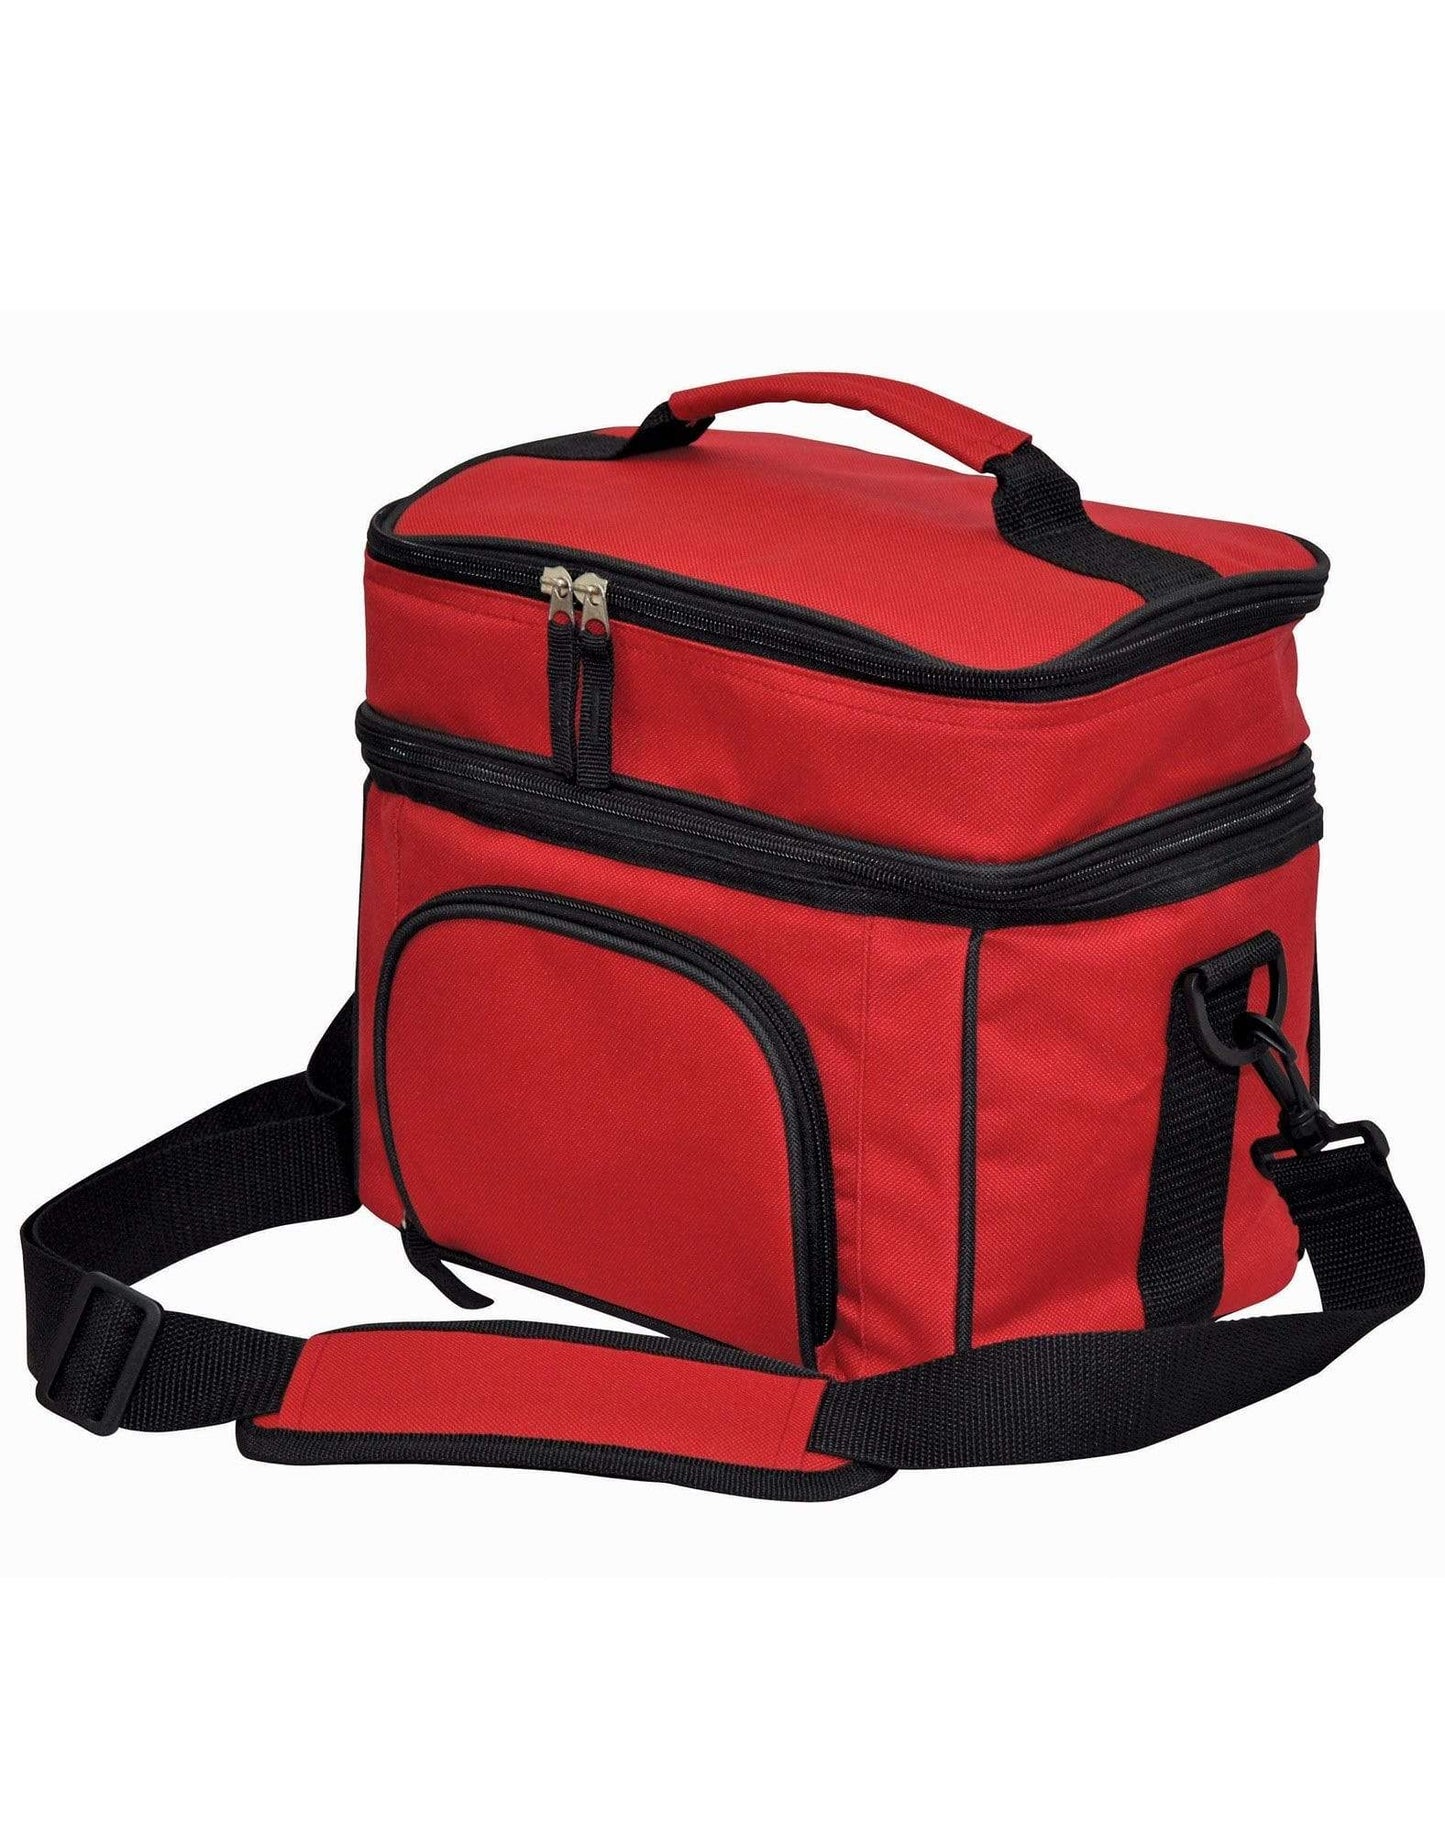 Travel Cooler Bag - Lunch/picnic B6002 Active Wear Winning Spirit Red/Black "(w)28cm x (h)25cm x (d)18cm Capacity: 12.6 Litres" 